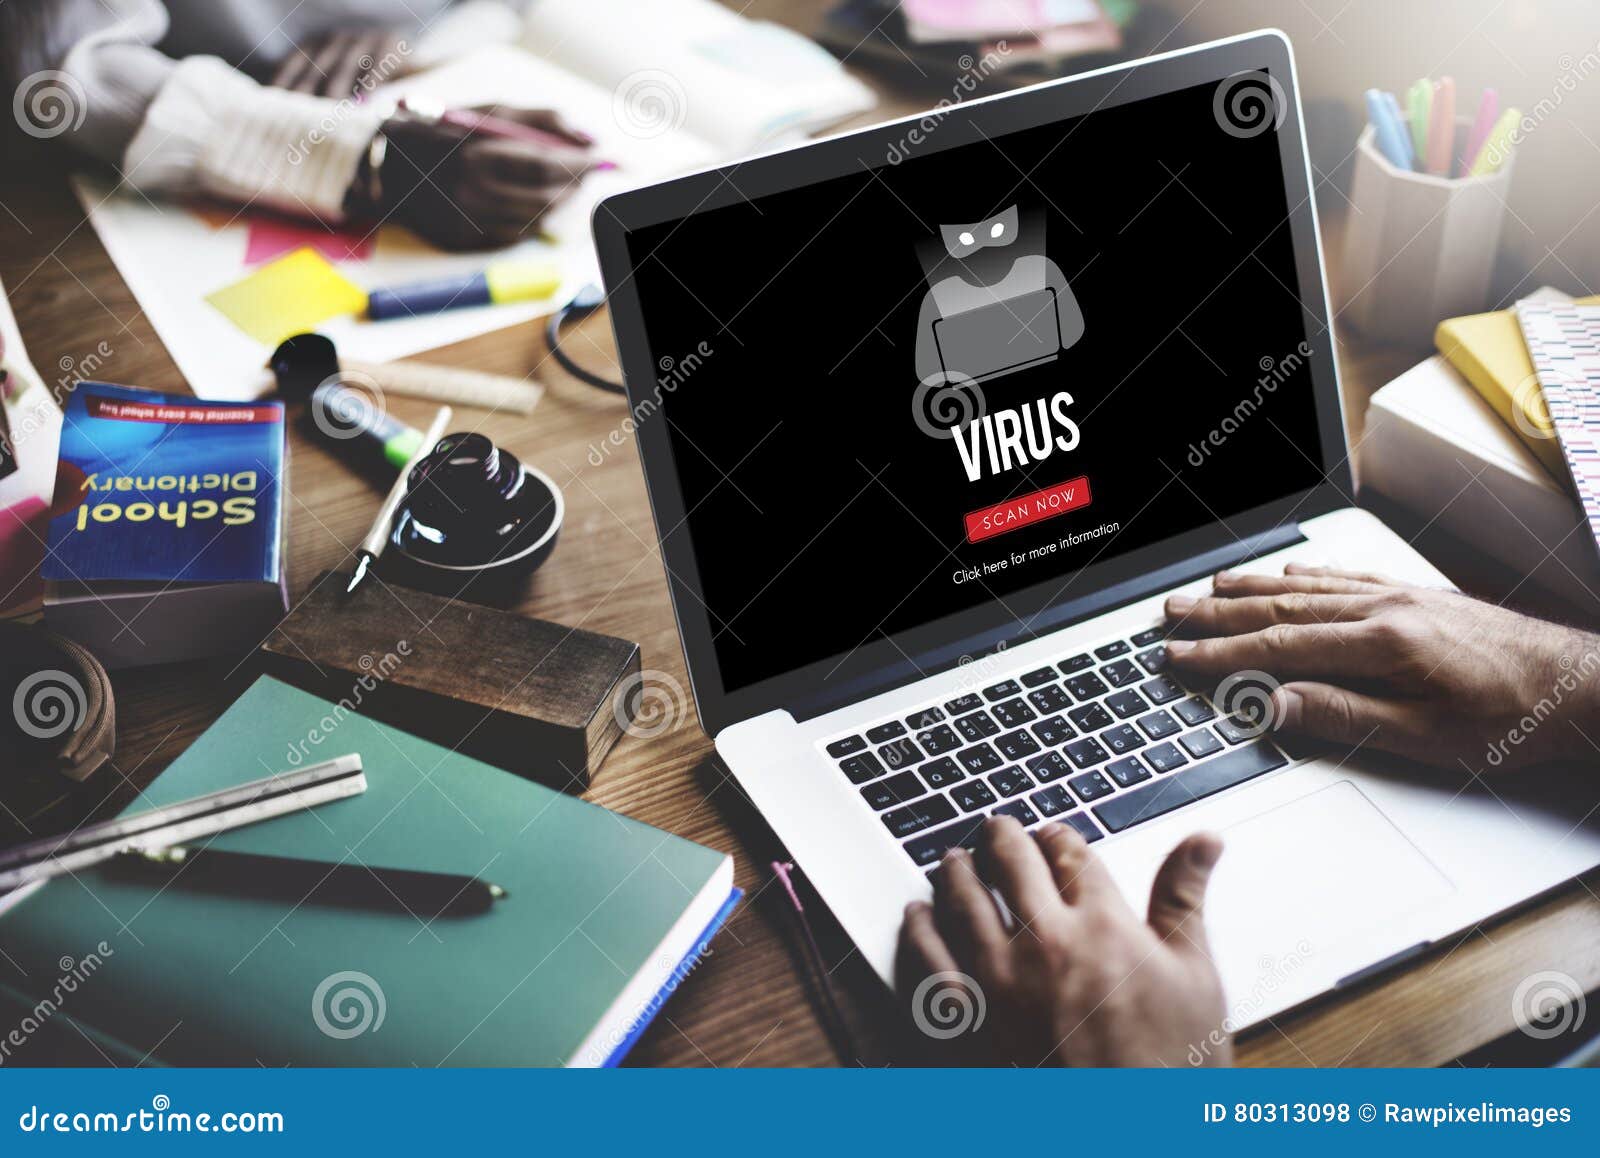 scam virus spyware malware antivirus concept